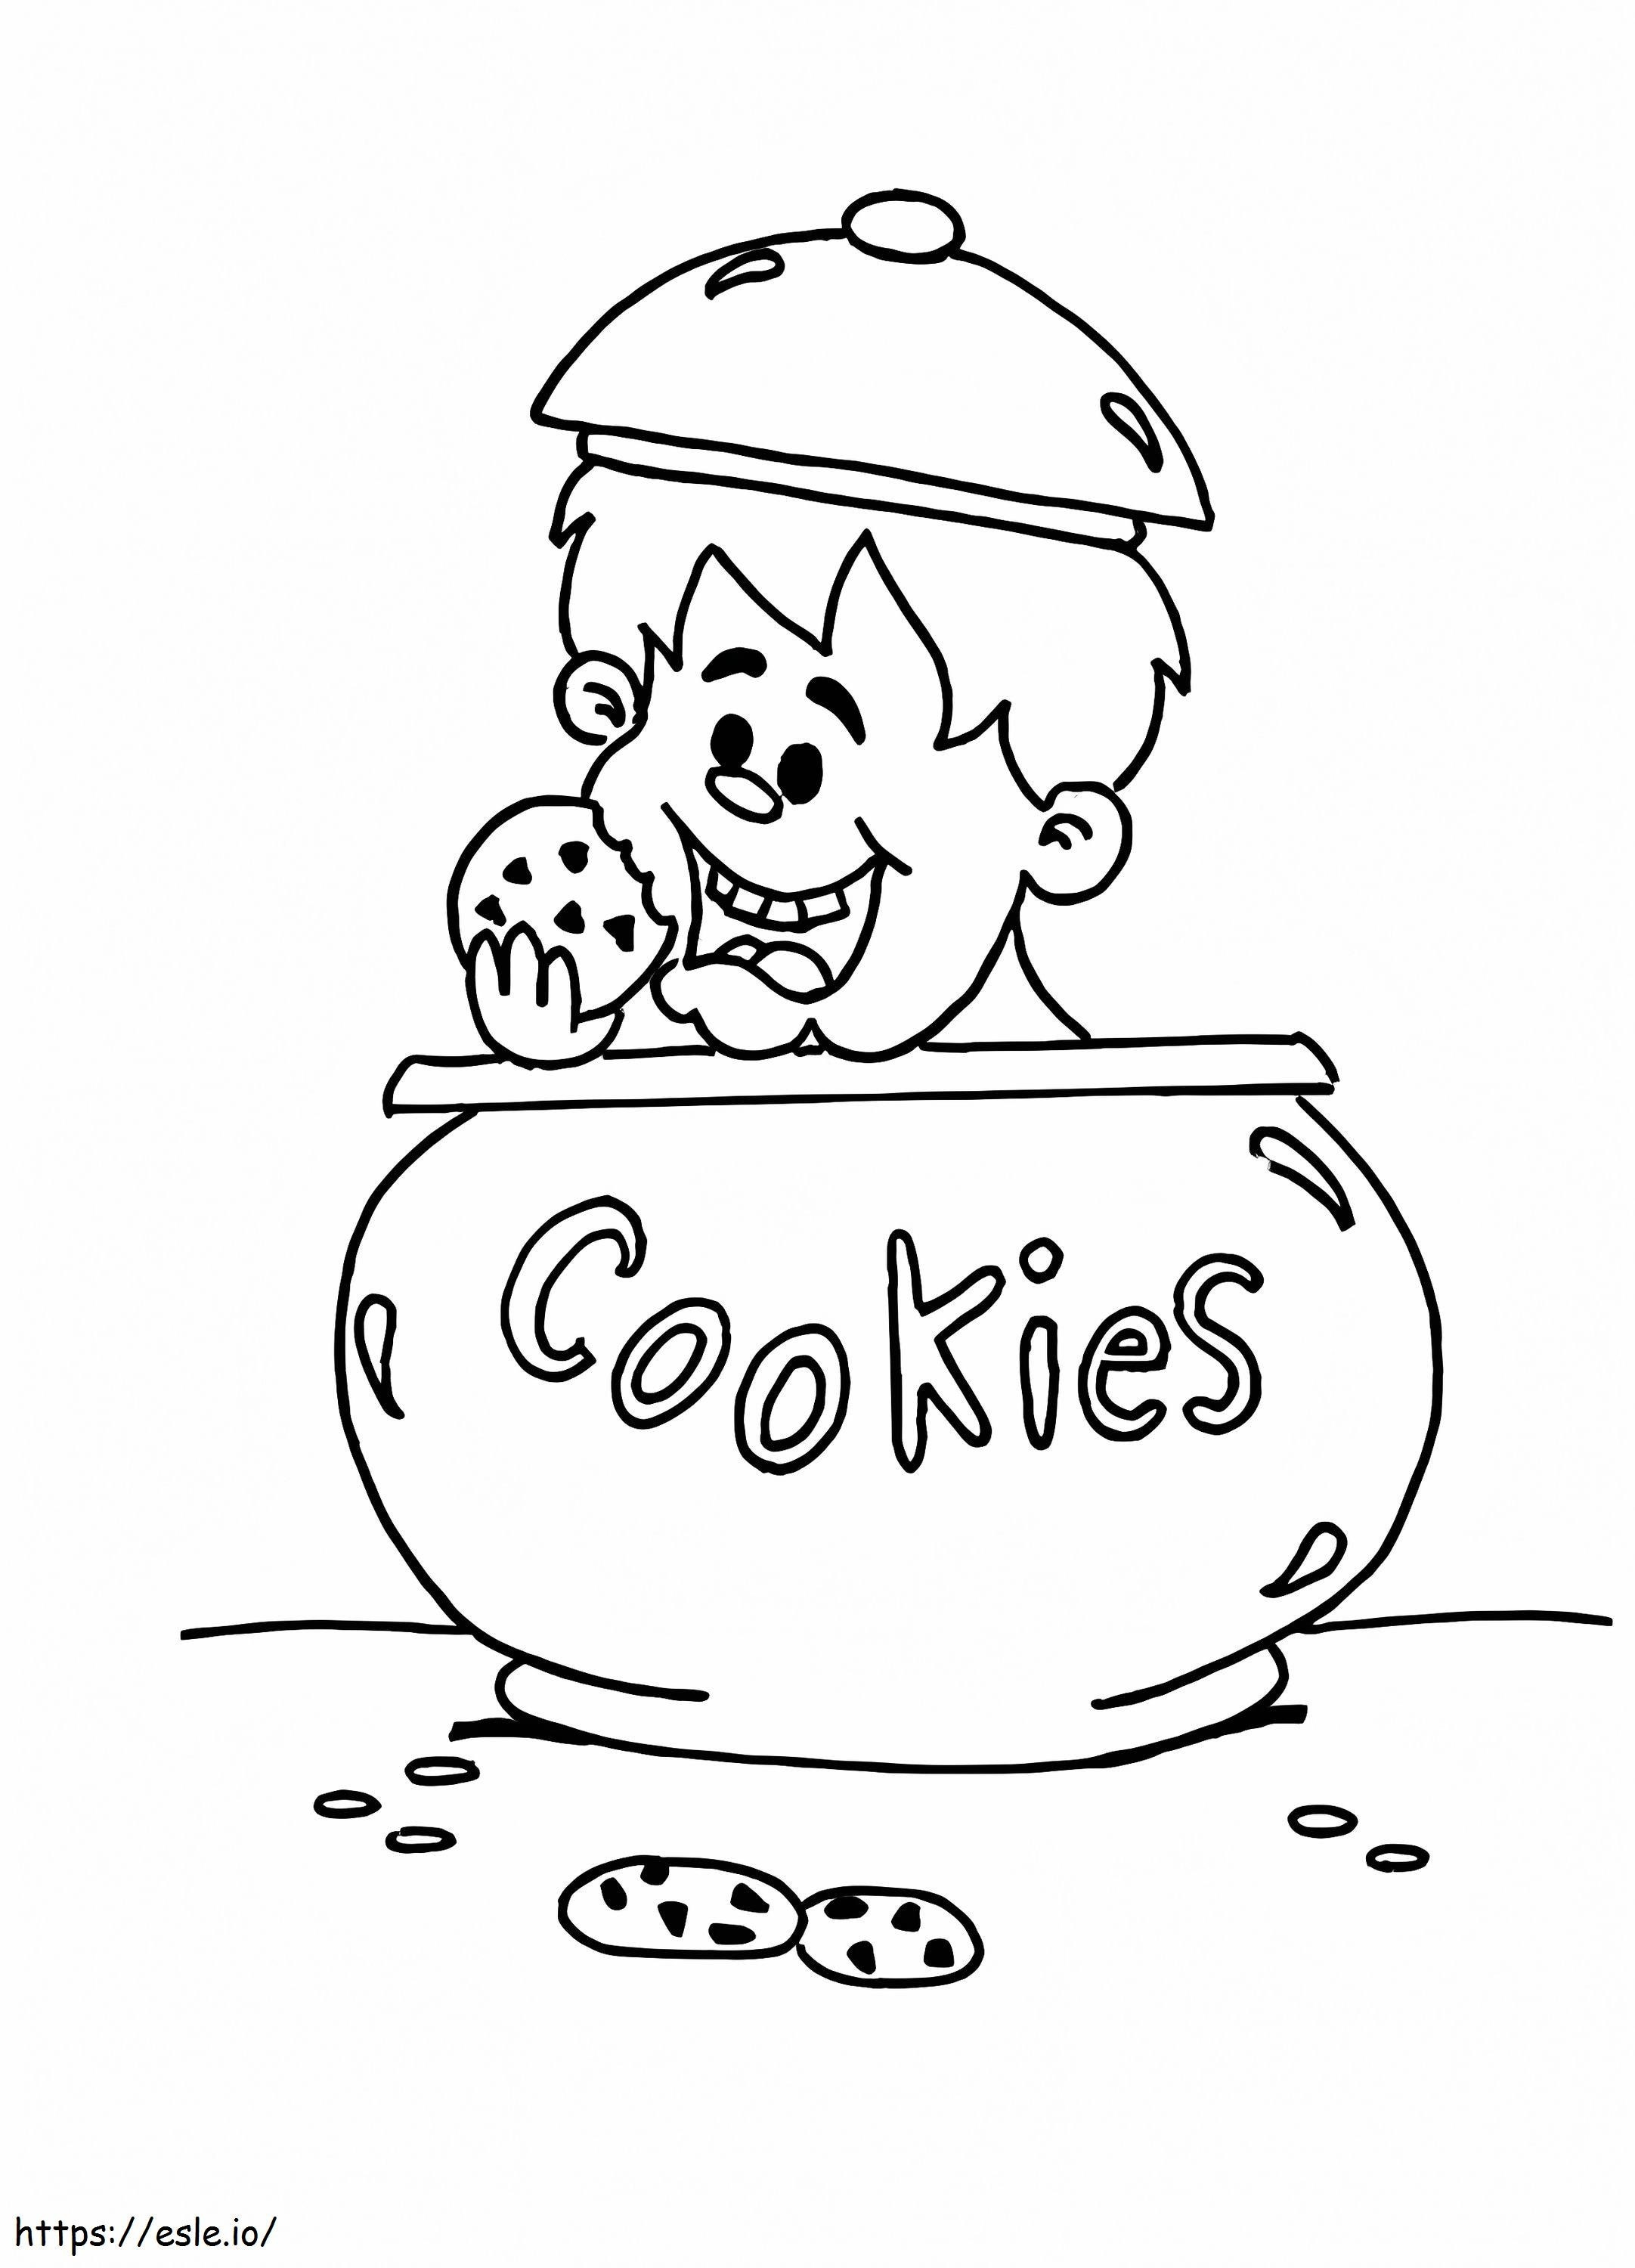 Boy In Cookie Jar coloring page